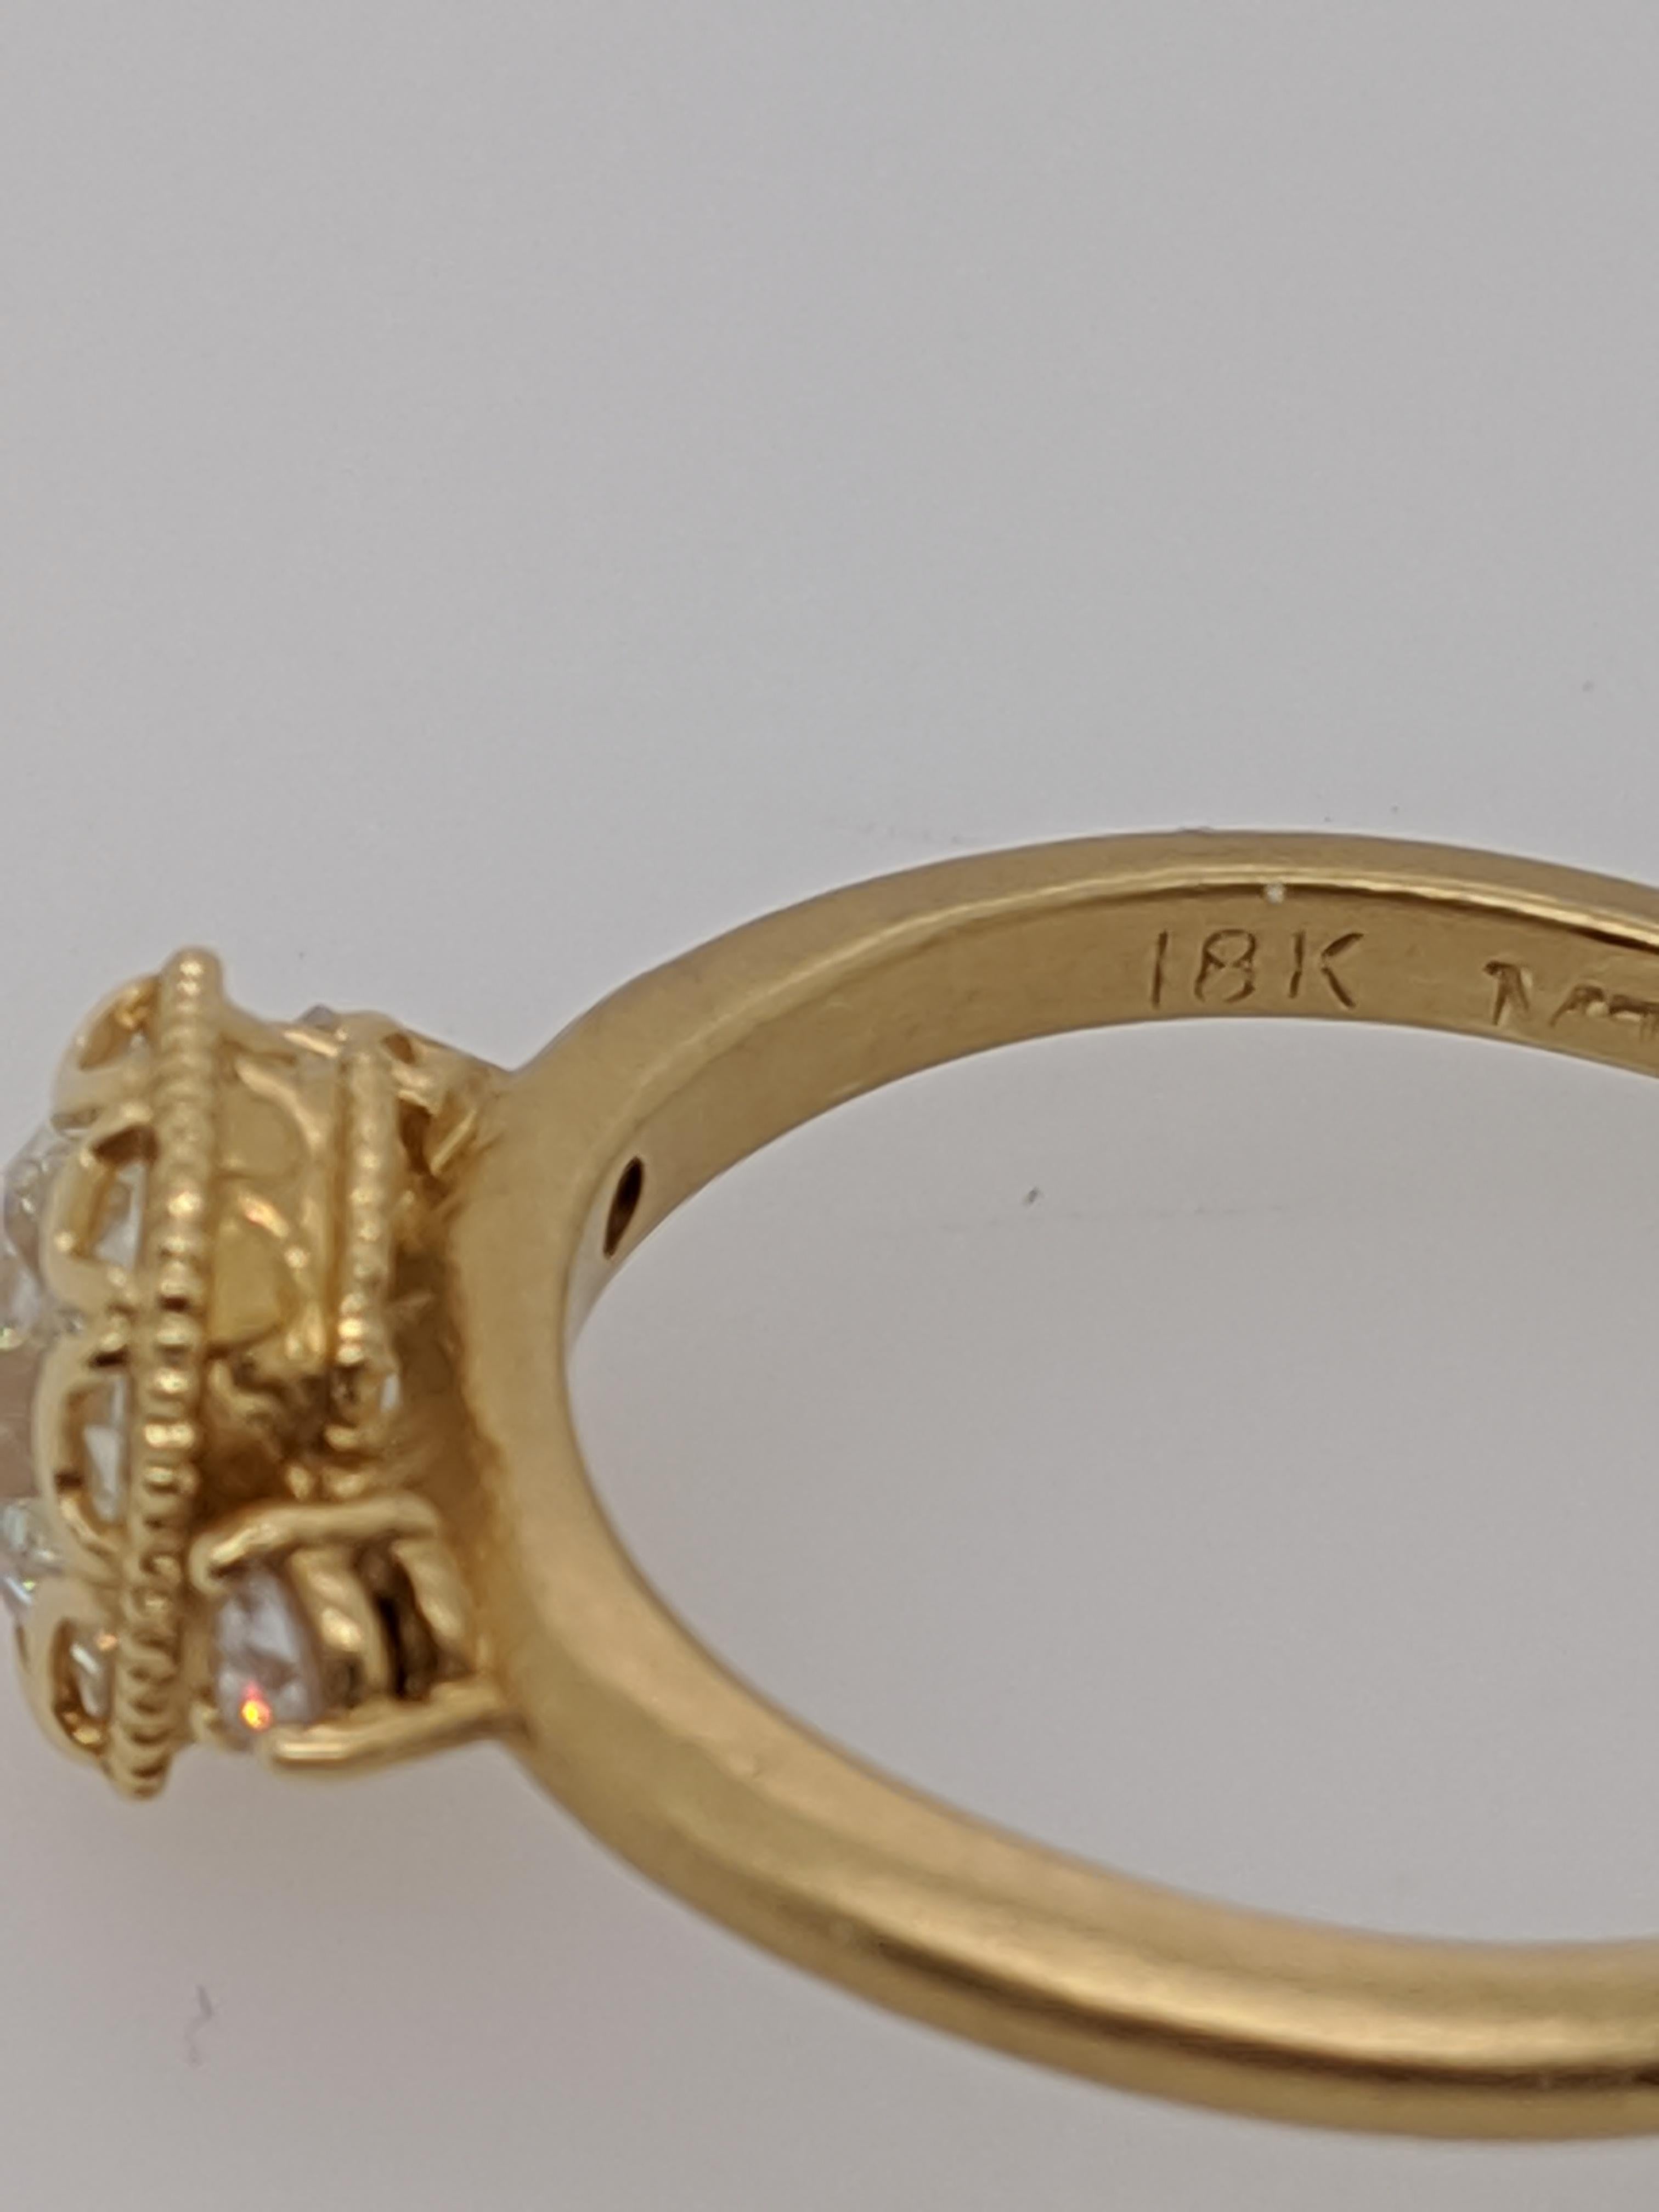 Contemporary One Carat Antique Cut Cushion Diamond Ring in 18 Karat Yellow Gold, GIA